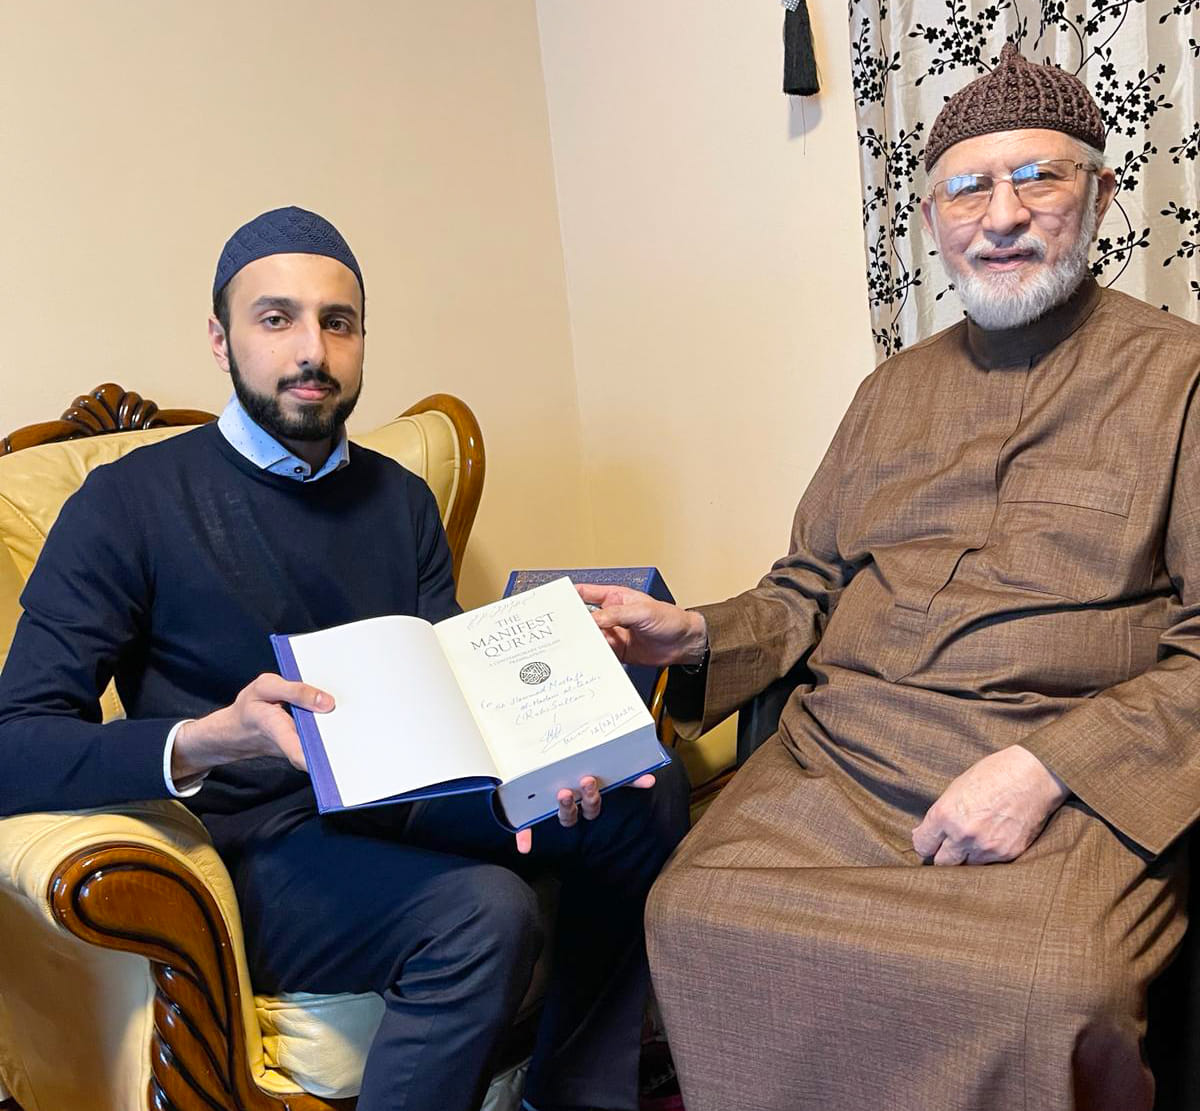 the Manifest Quran gifted to Hammad Mustafa